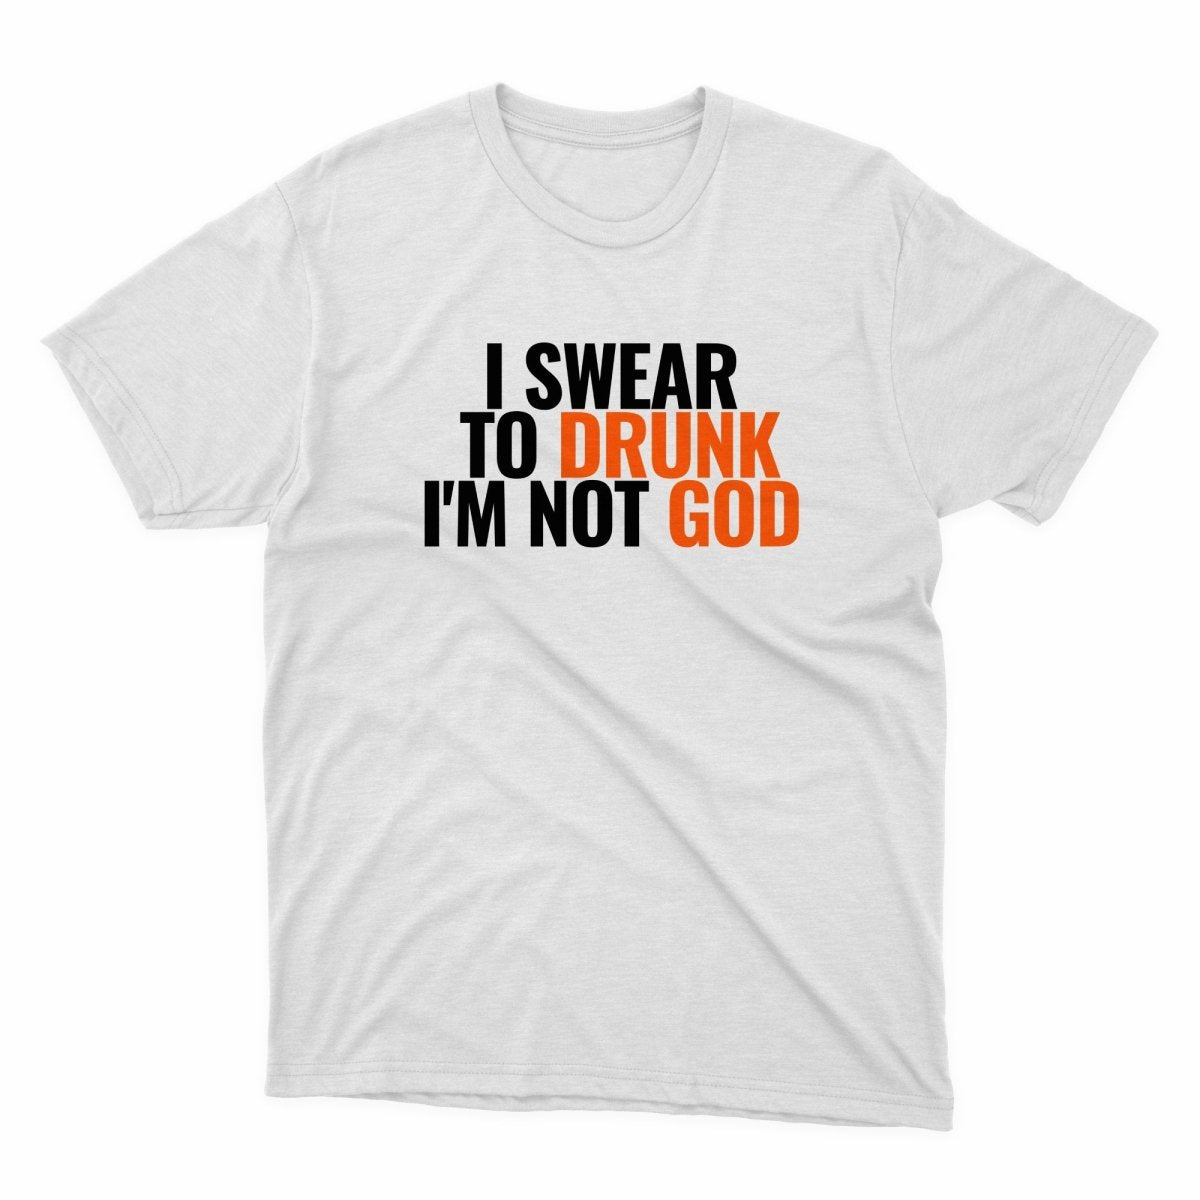 I Swear To Drunk I'm Not God Shirt - stickerbullI Swear To Drunk I'm Not God ShirtShirtsPrintifystickerbull66879682090827311194WhiteSa white t - shirt that says i swear to drunk i'm not god